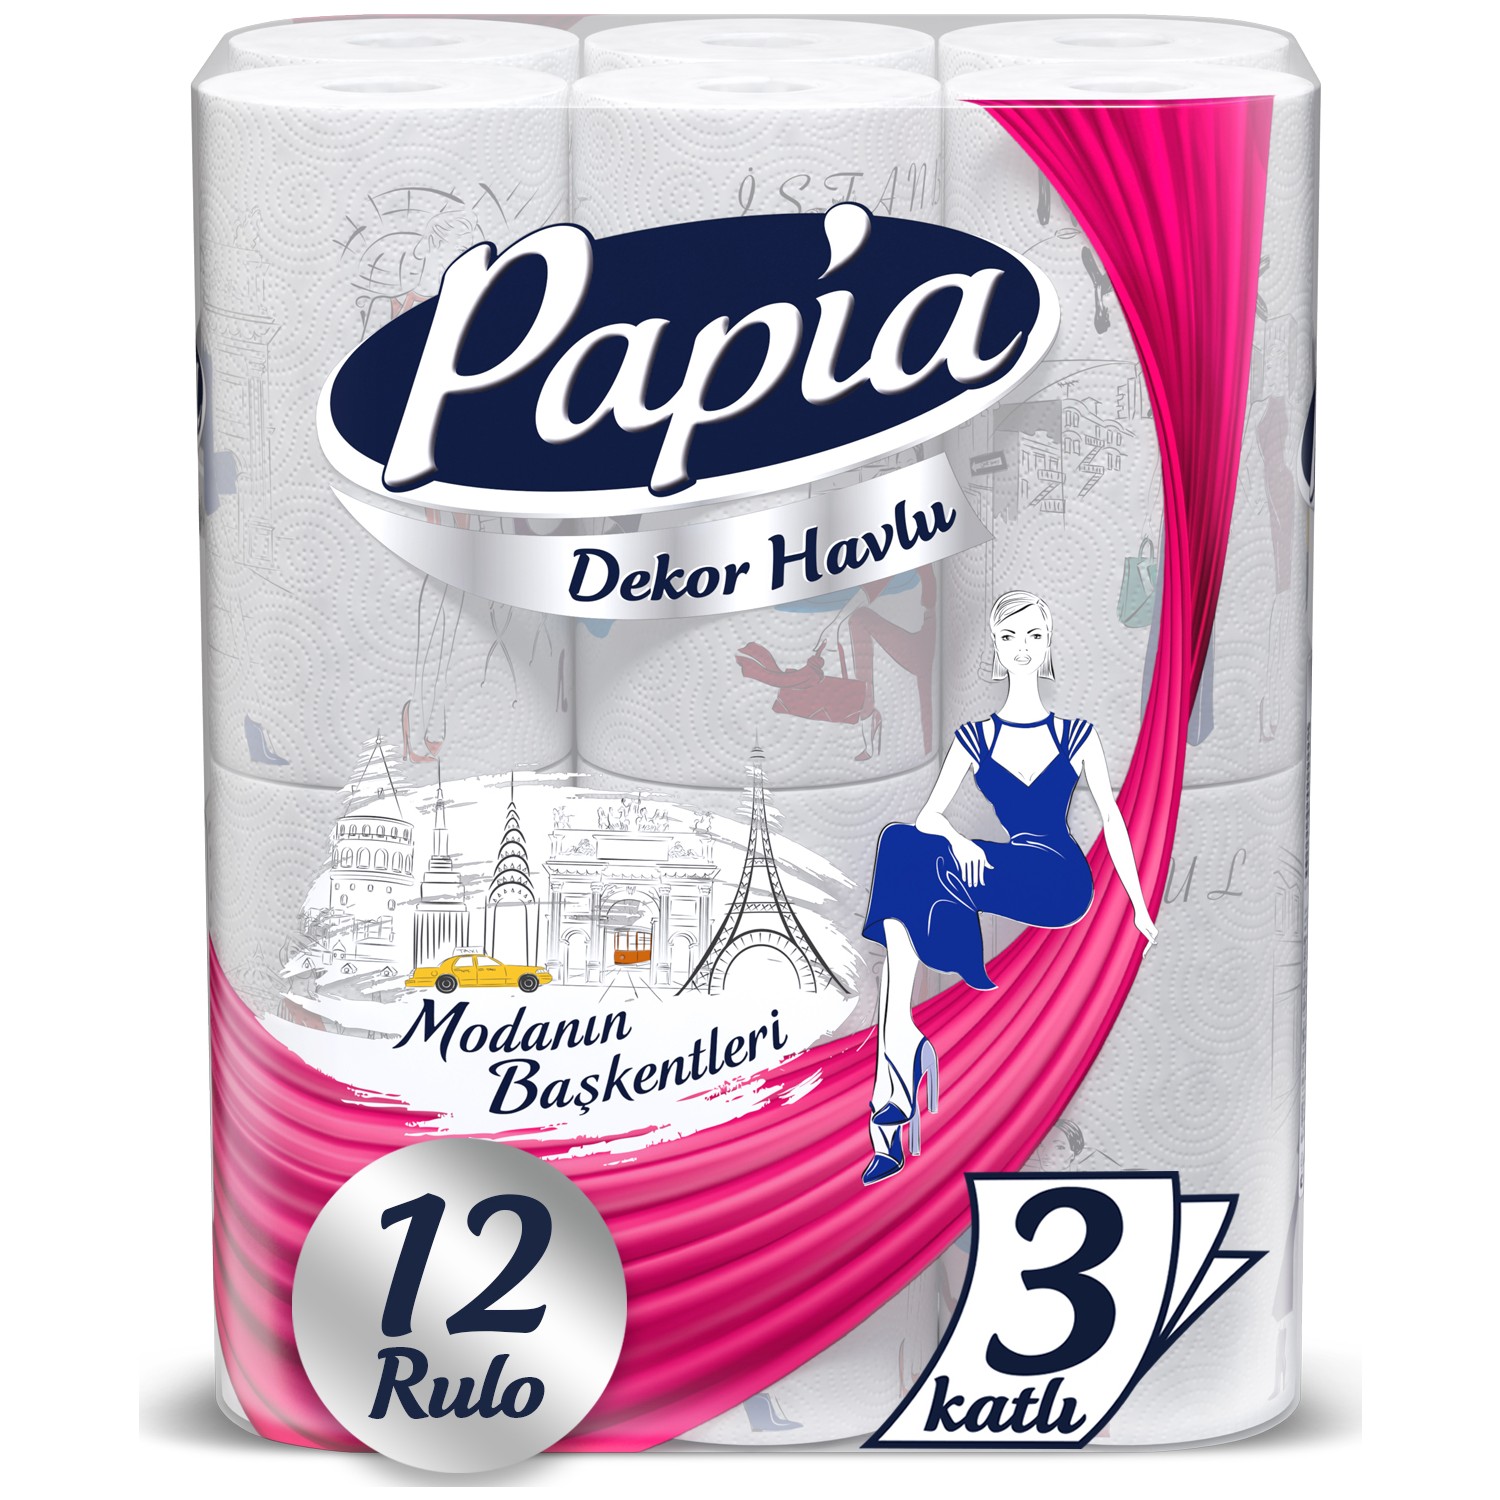 Полотенце папия. Полотенца Papia Decor. Papia бумажные полотенца Fashion. Papia Decor бумажные полотенца. Papia Dekor 3 слоя 2 рулона полотенца.